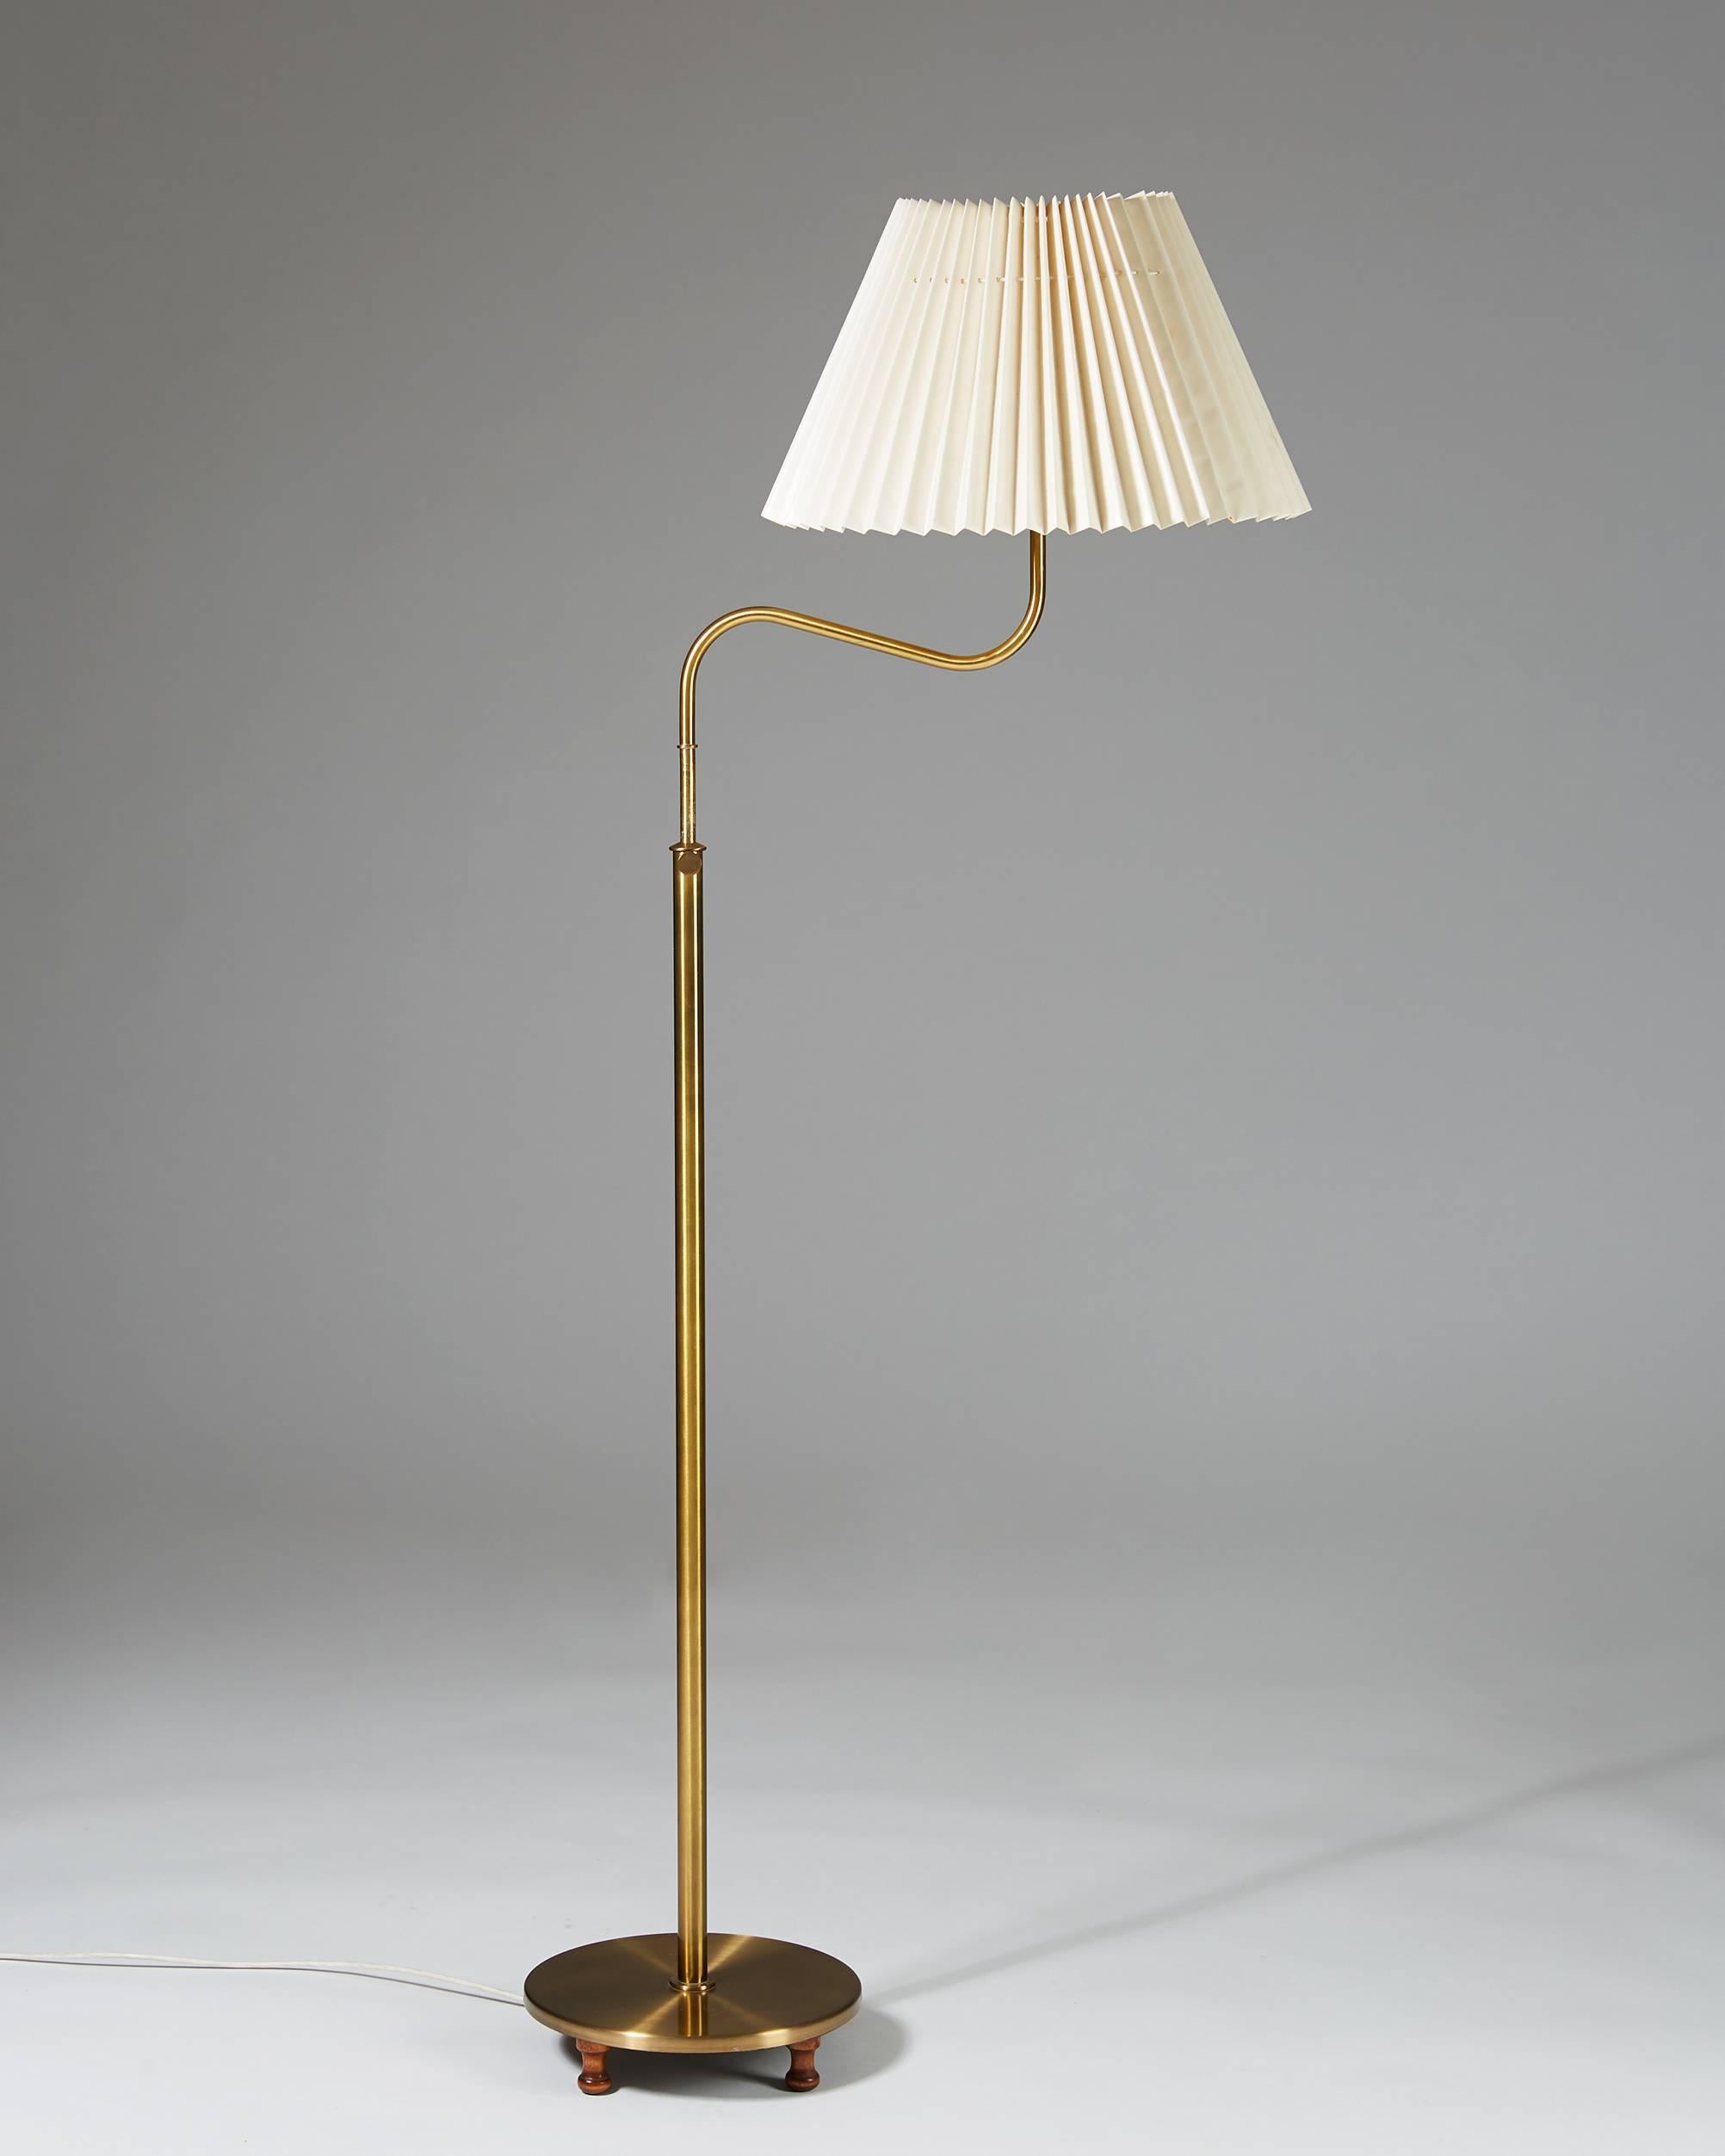 Floor lamp model 2568 designed by Josef Frank for Svenskt Tenn, 
Sweden, 1939. 

Brass, enameled steel and mahogany

Measures: H 170 cm/ 5' 7 1/4